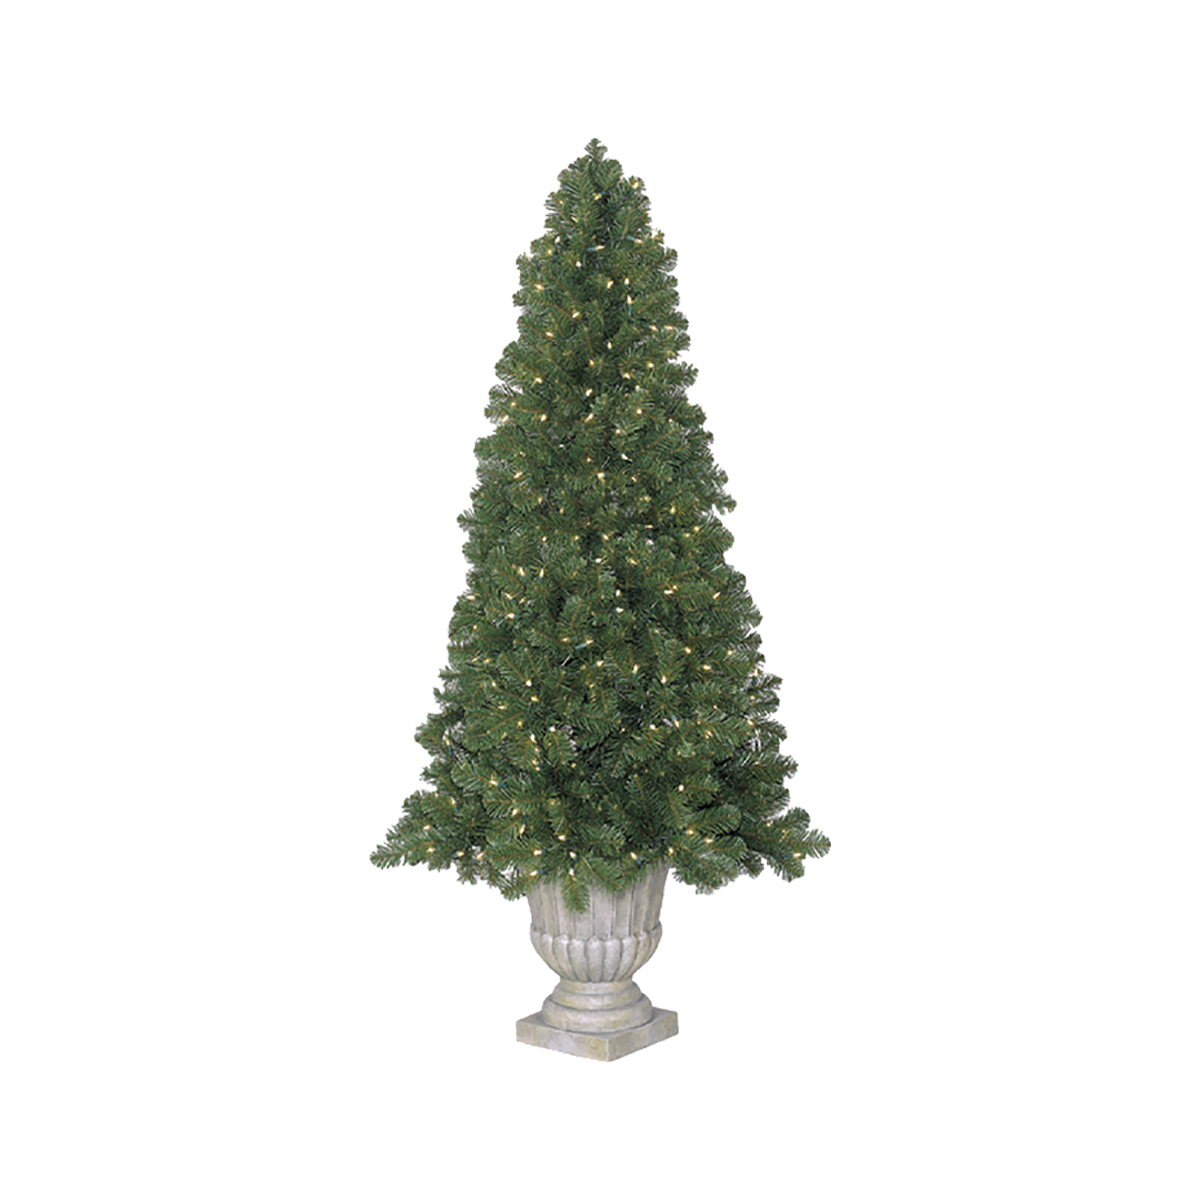 Everest Fir Christmas Tree - Warm White LED Lights - w/ Urn - 6.5ft Tall